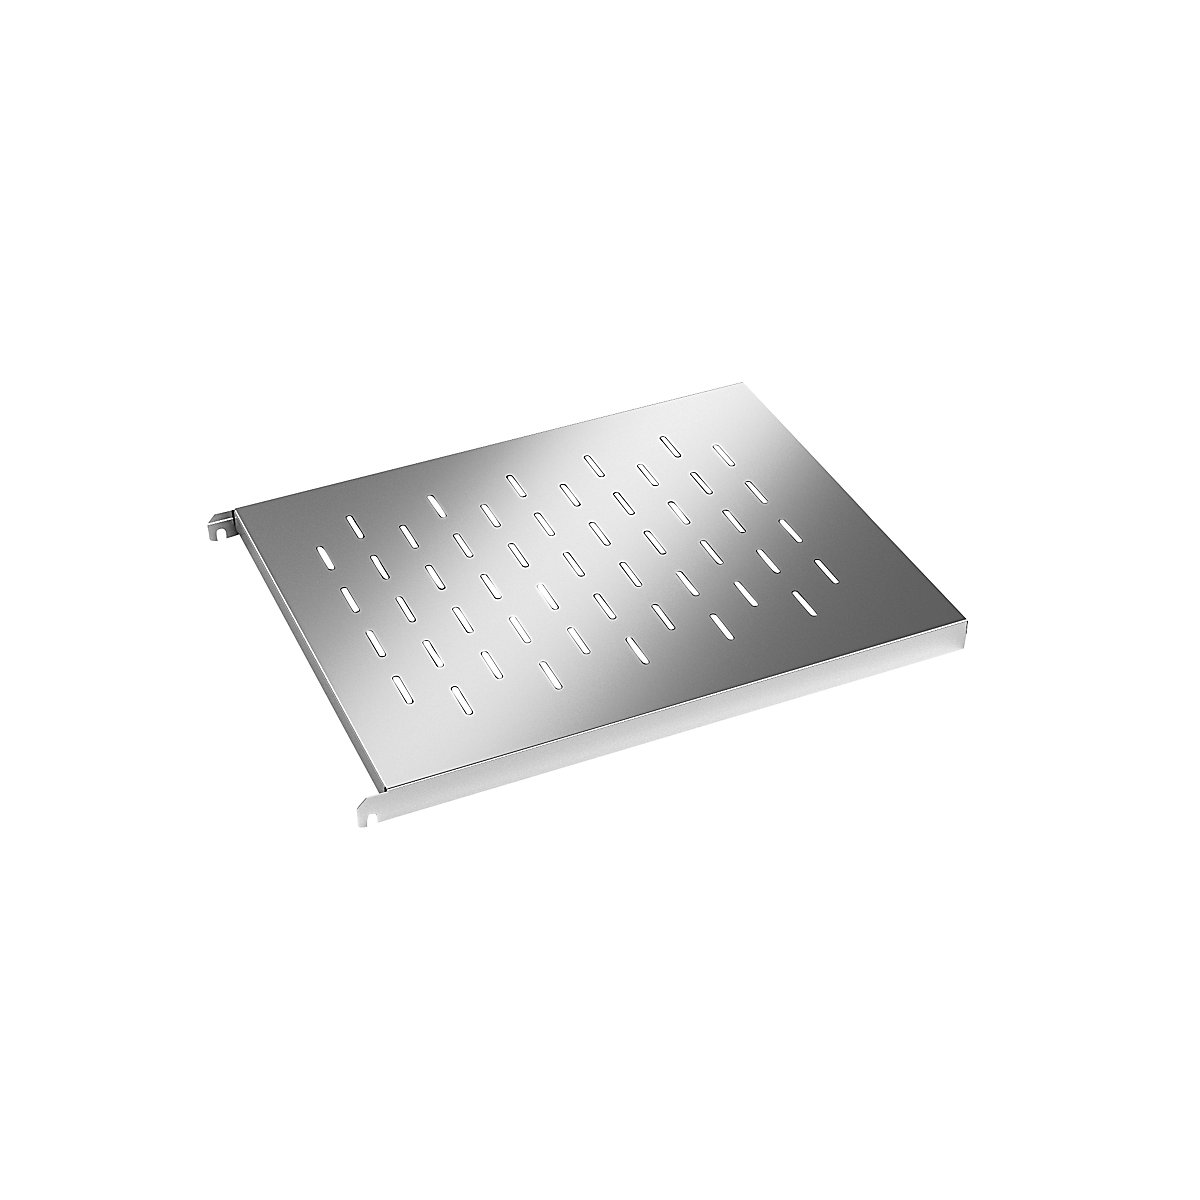 Stainless steel shelf, perforated corner shelf, WxD 640 x 540 mm